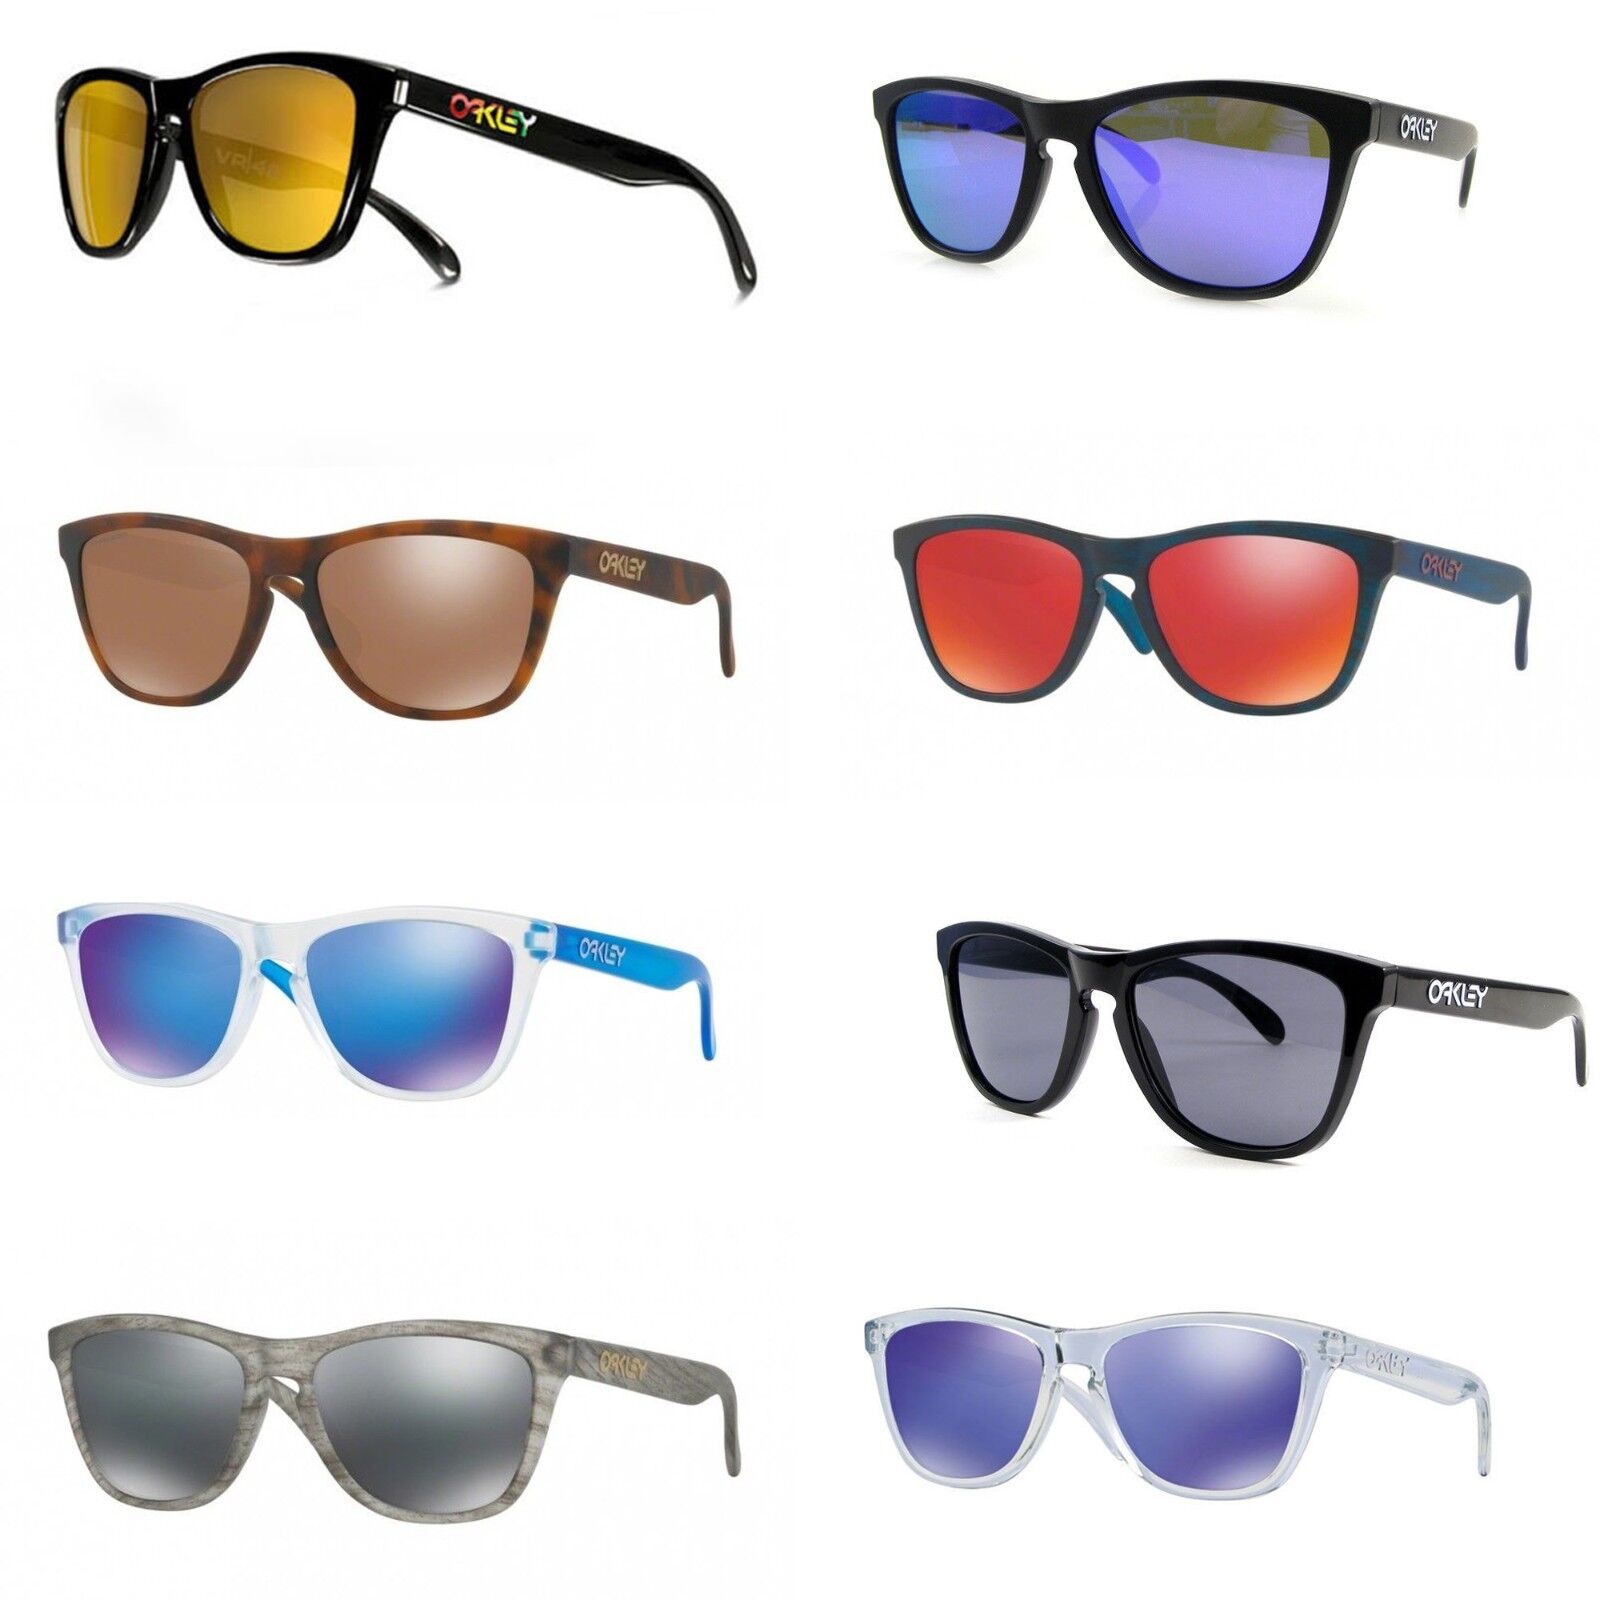 sunglasses Oakley FROGSKINS mirror sunglasses Limited edition | eBay